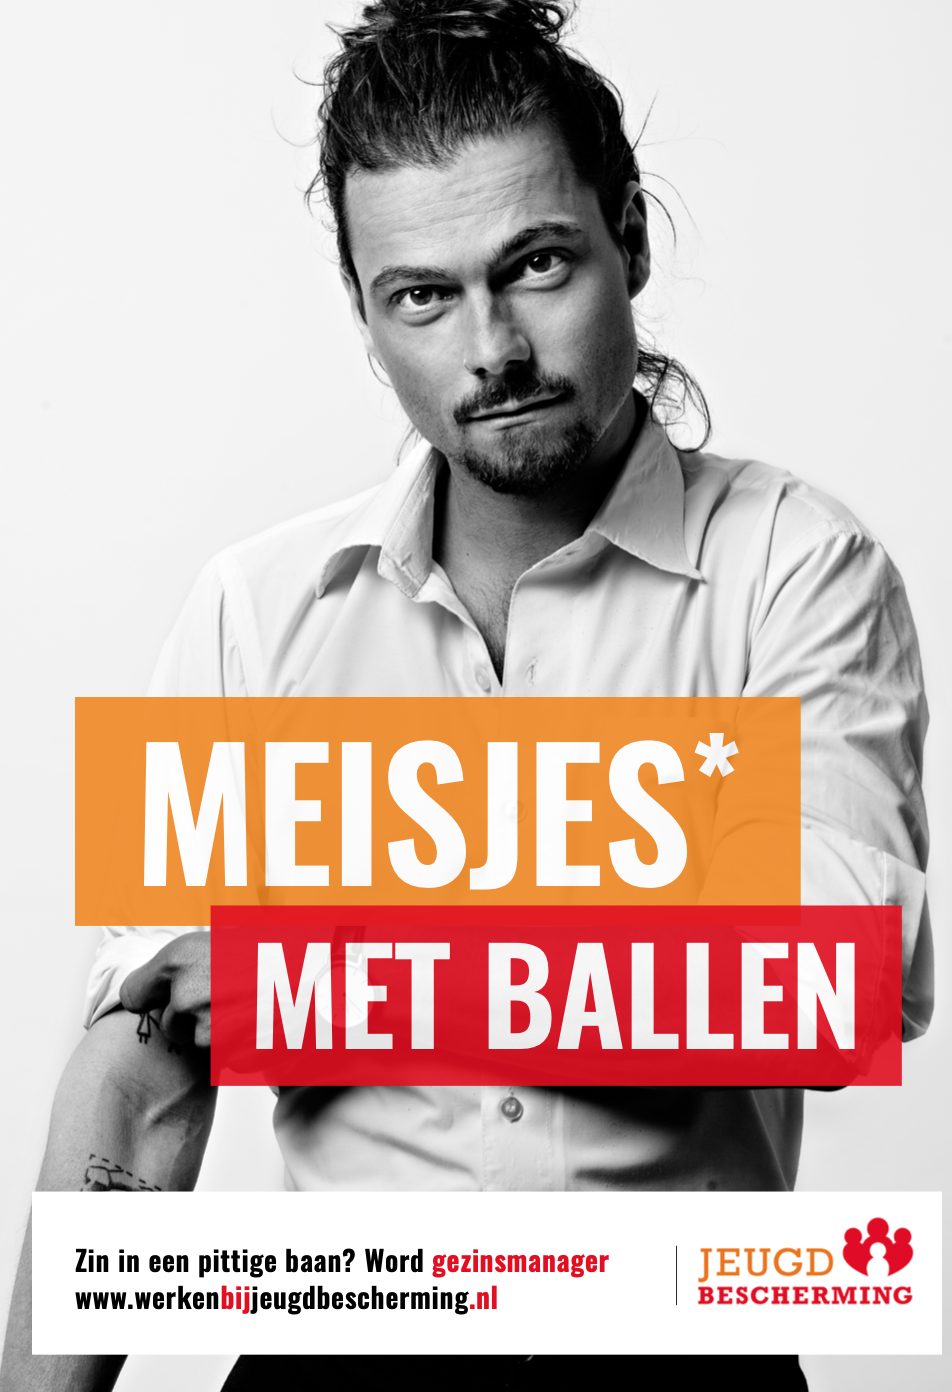 Arbeidsmarkt campagne Jeugdbescherming Amsterdam - meisjes met ballen